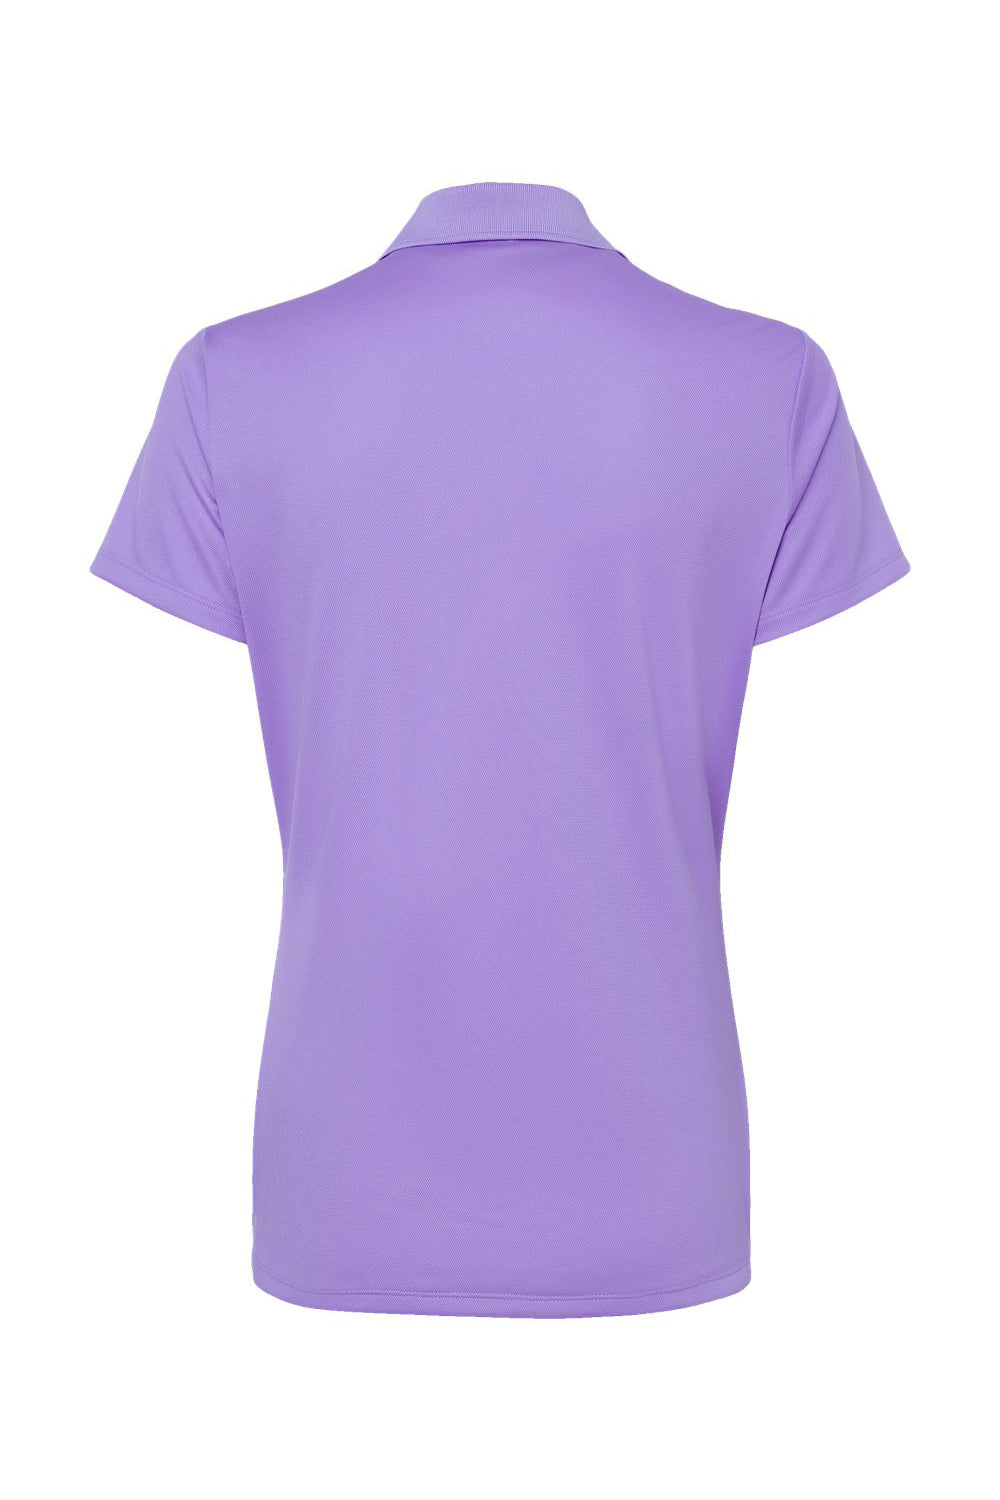 Adidas A431 Womens UV Protection Short Sleeve Polo Shirt Light Flash Purple Flat Back